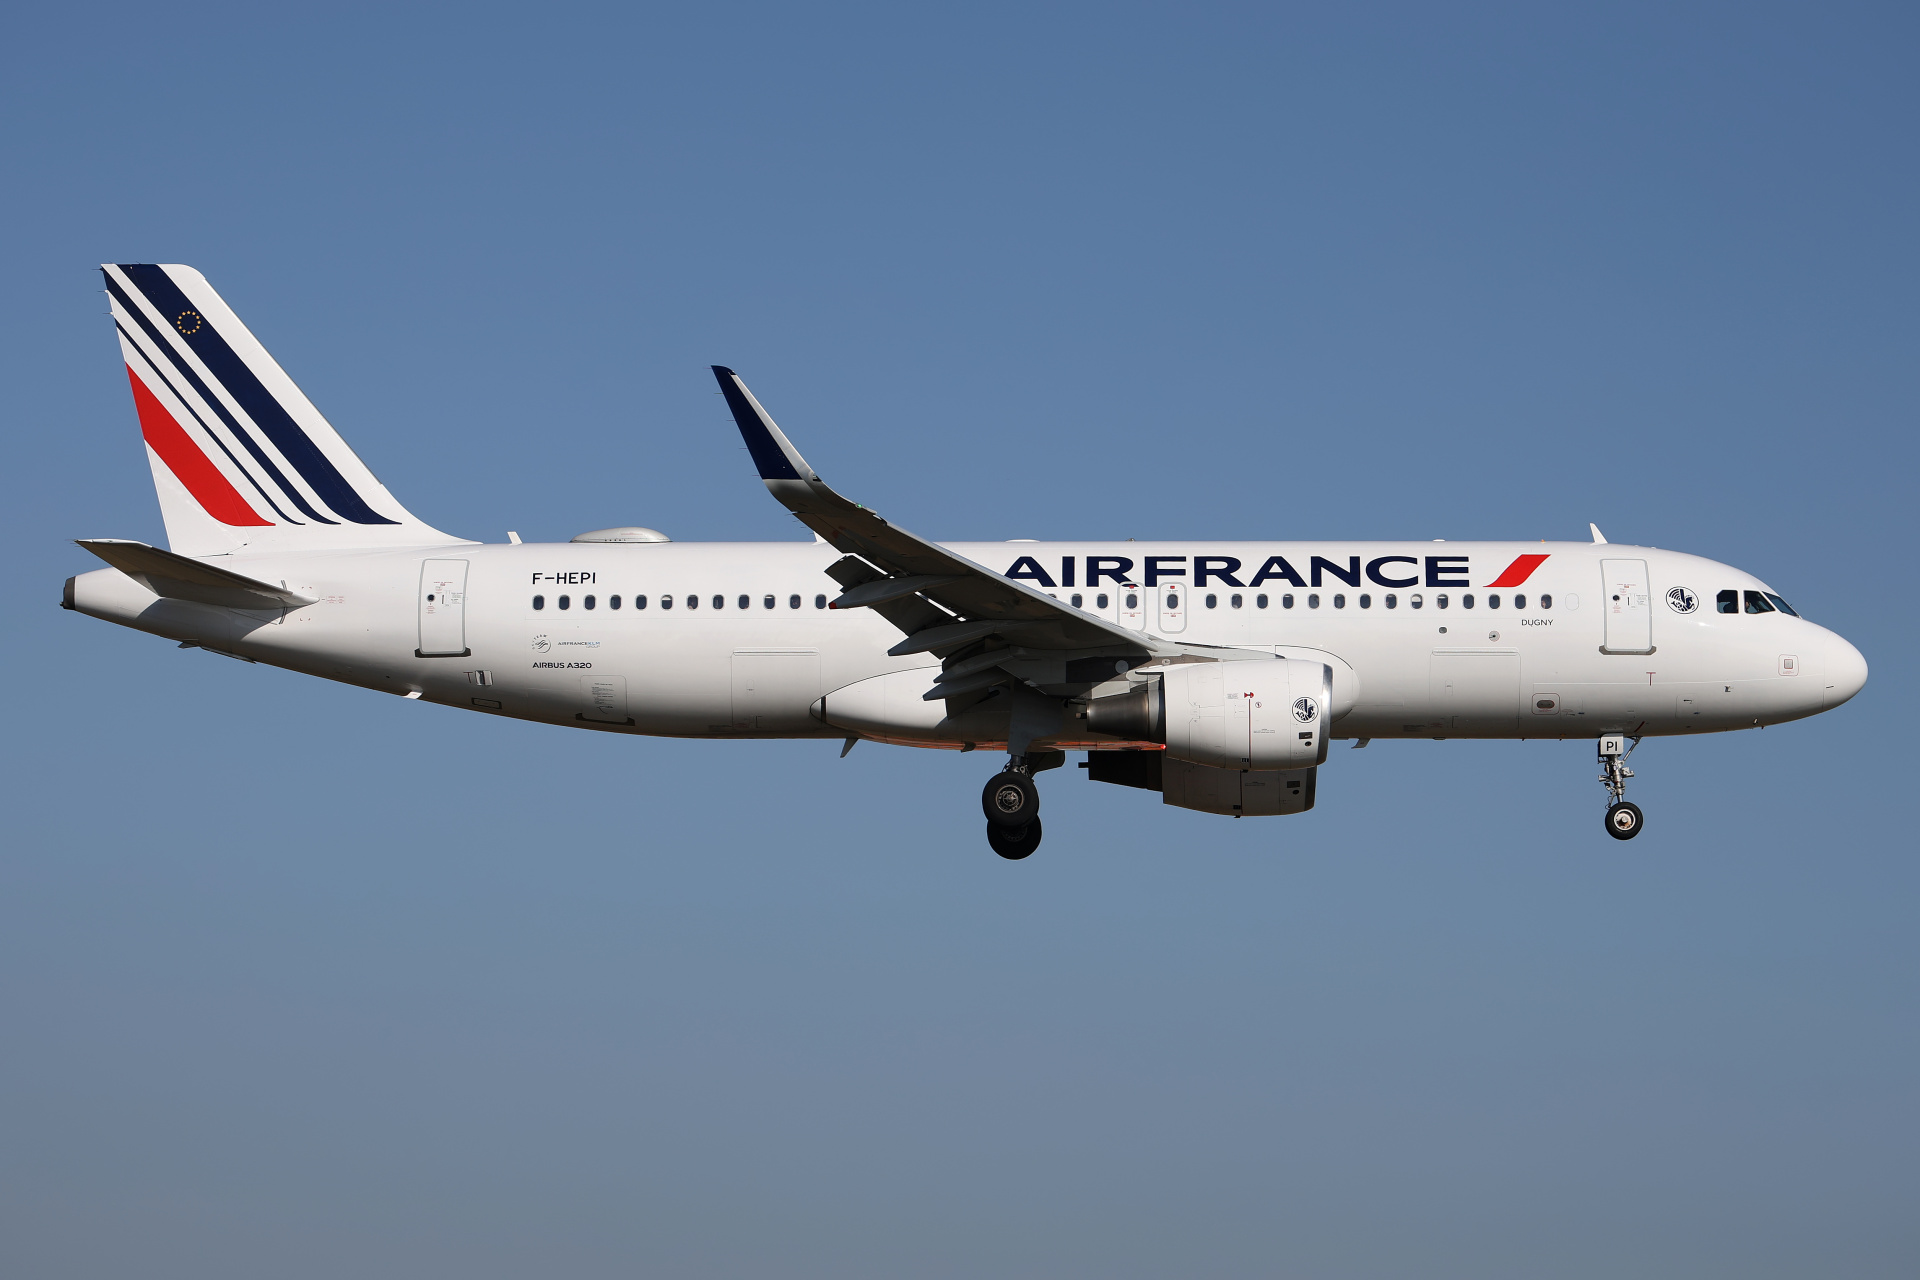 F-HEPI (Aircraft » EPWA Spotting » Airbus A320-200 » Air France)